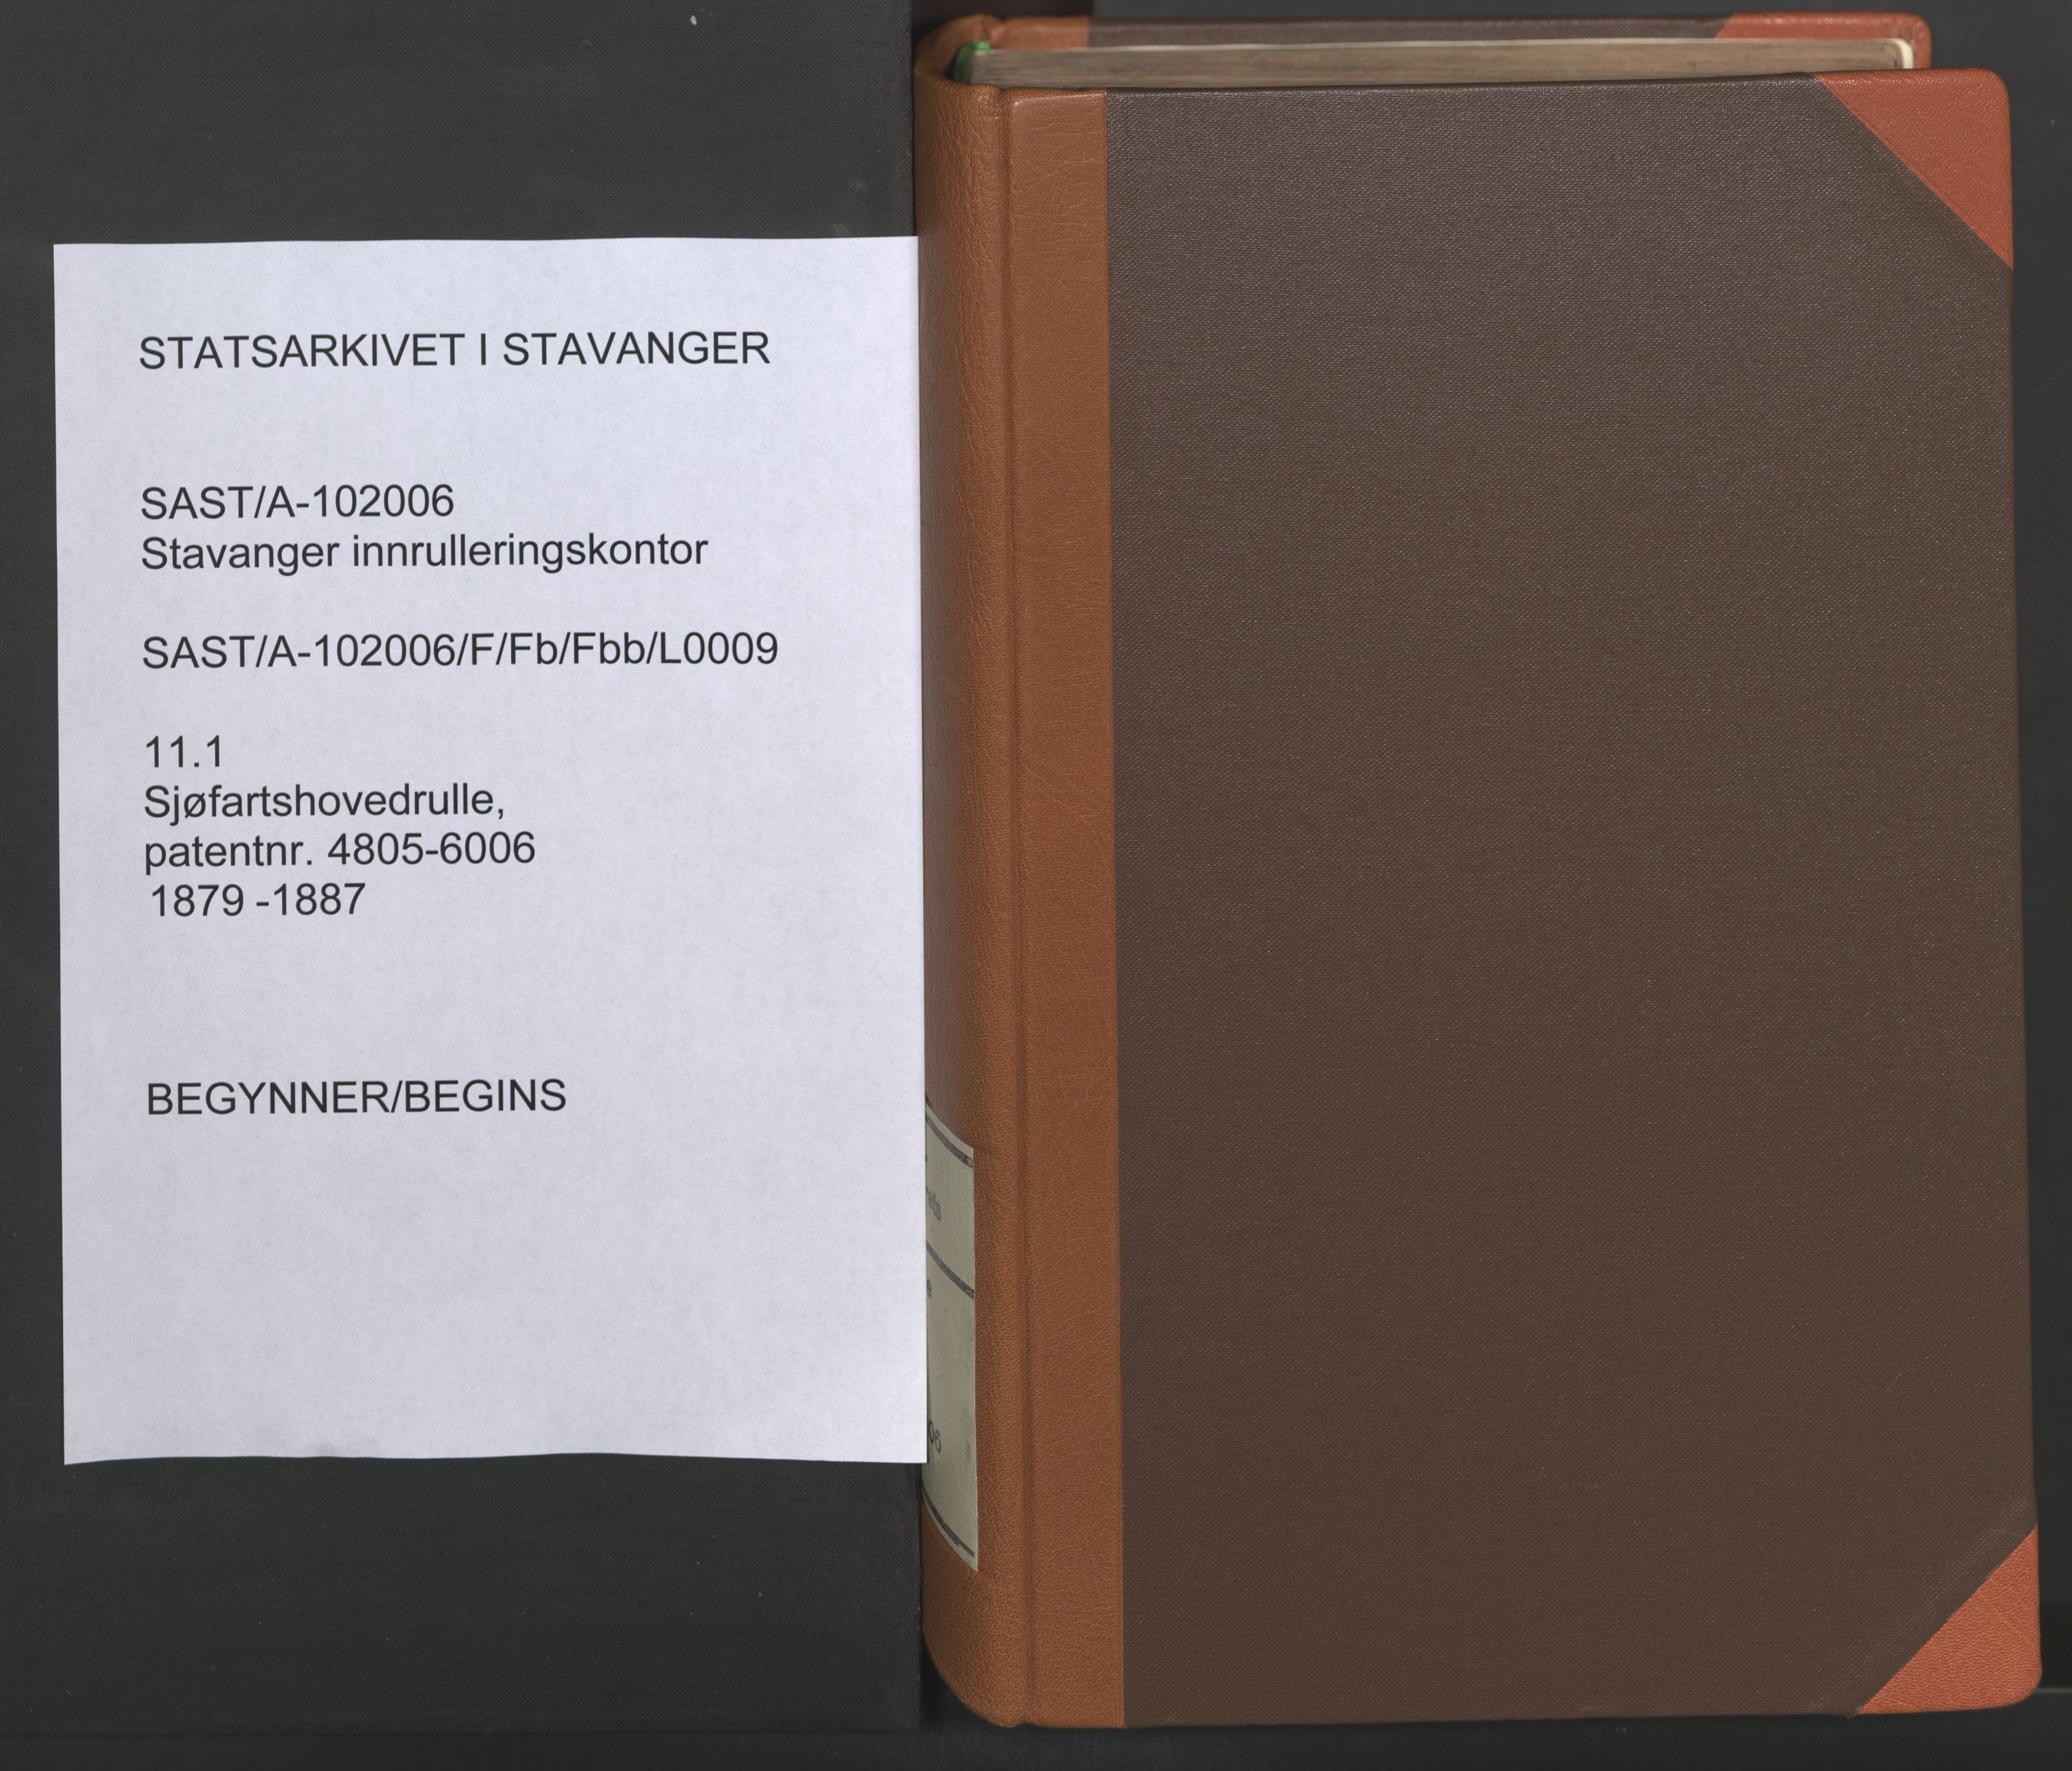 Stavanger sjømannskontor, SAST/A-102006/F/Fb/Fbb/L0009: Sjøfartshovedrulle, patentnr. 4805-6006, 1879-1887, p. 1